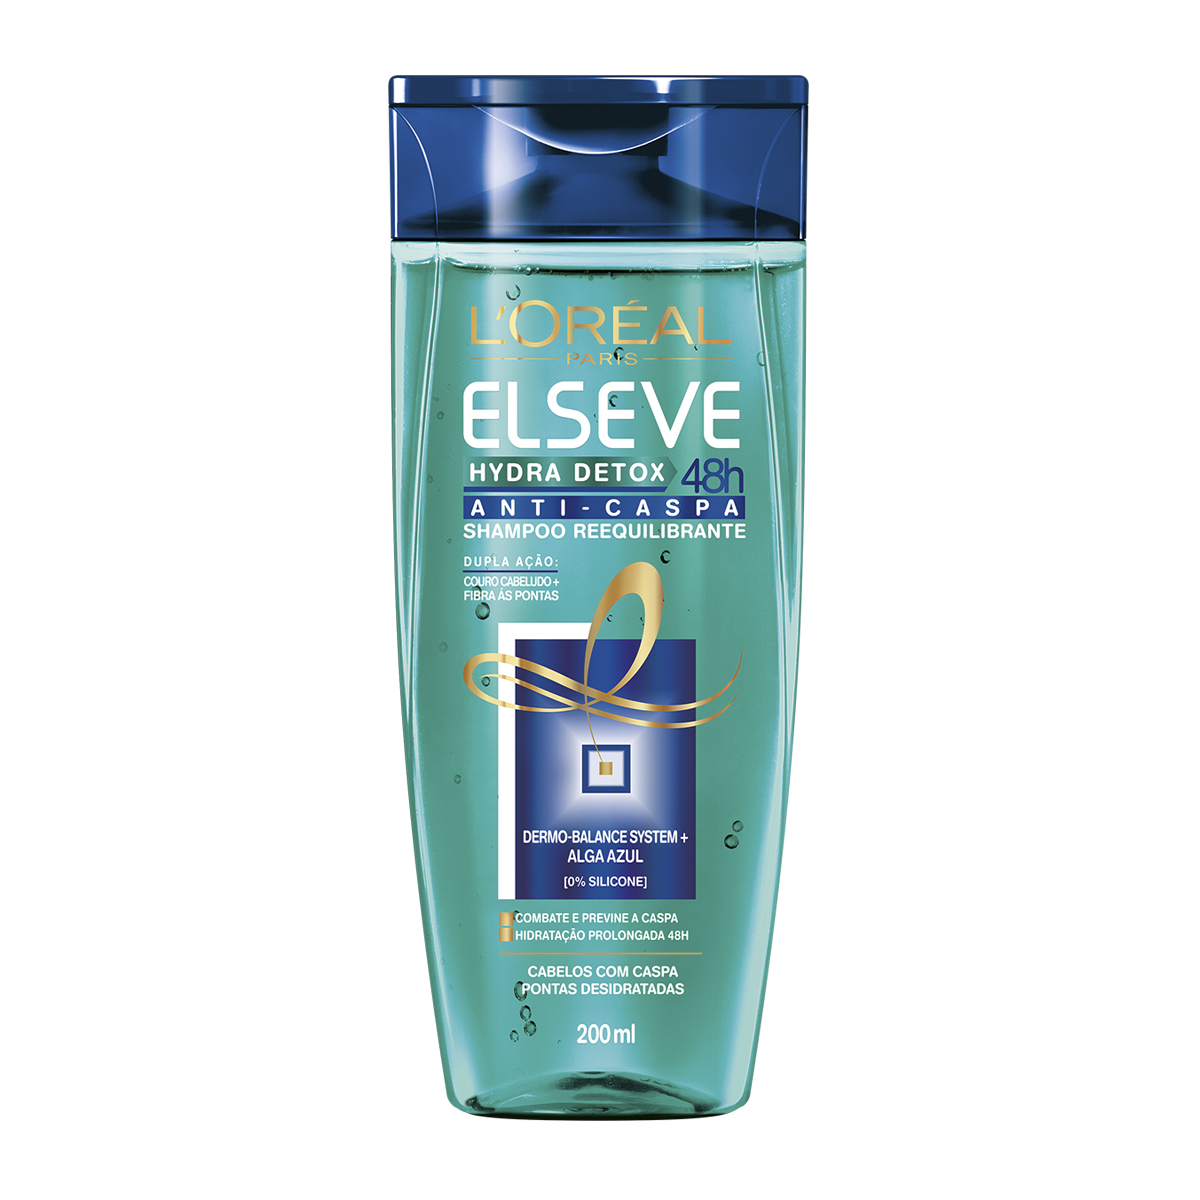 Shampoo Hydra Detox 48h Anti-Caspa Elseve 200ml